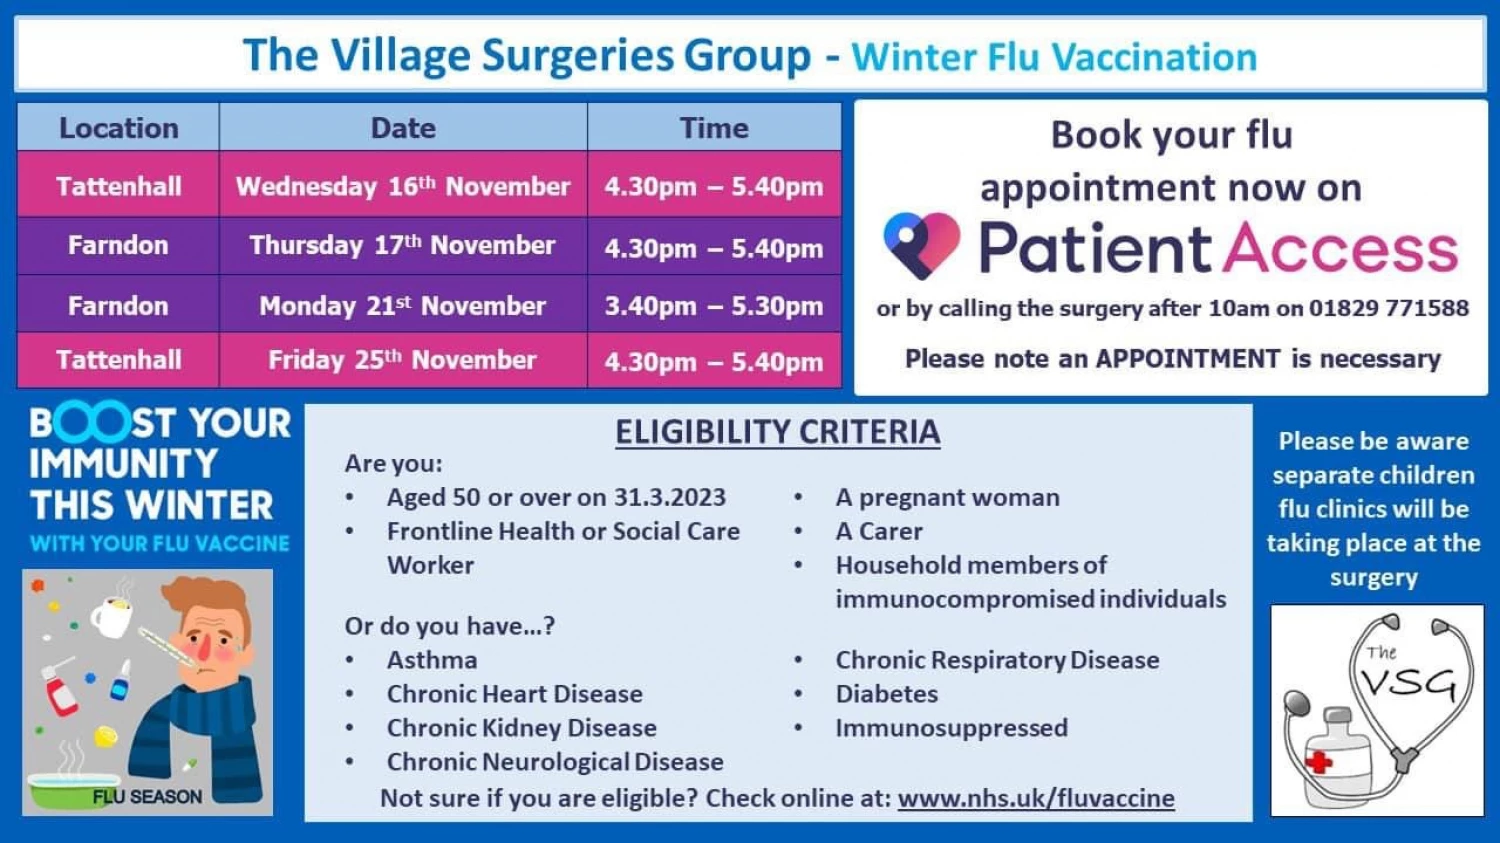 additional flu vaccination clinics